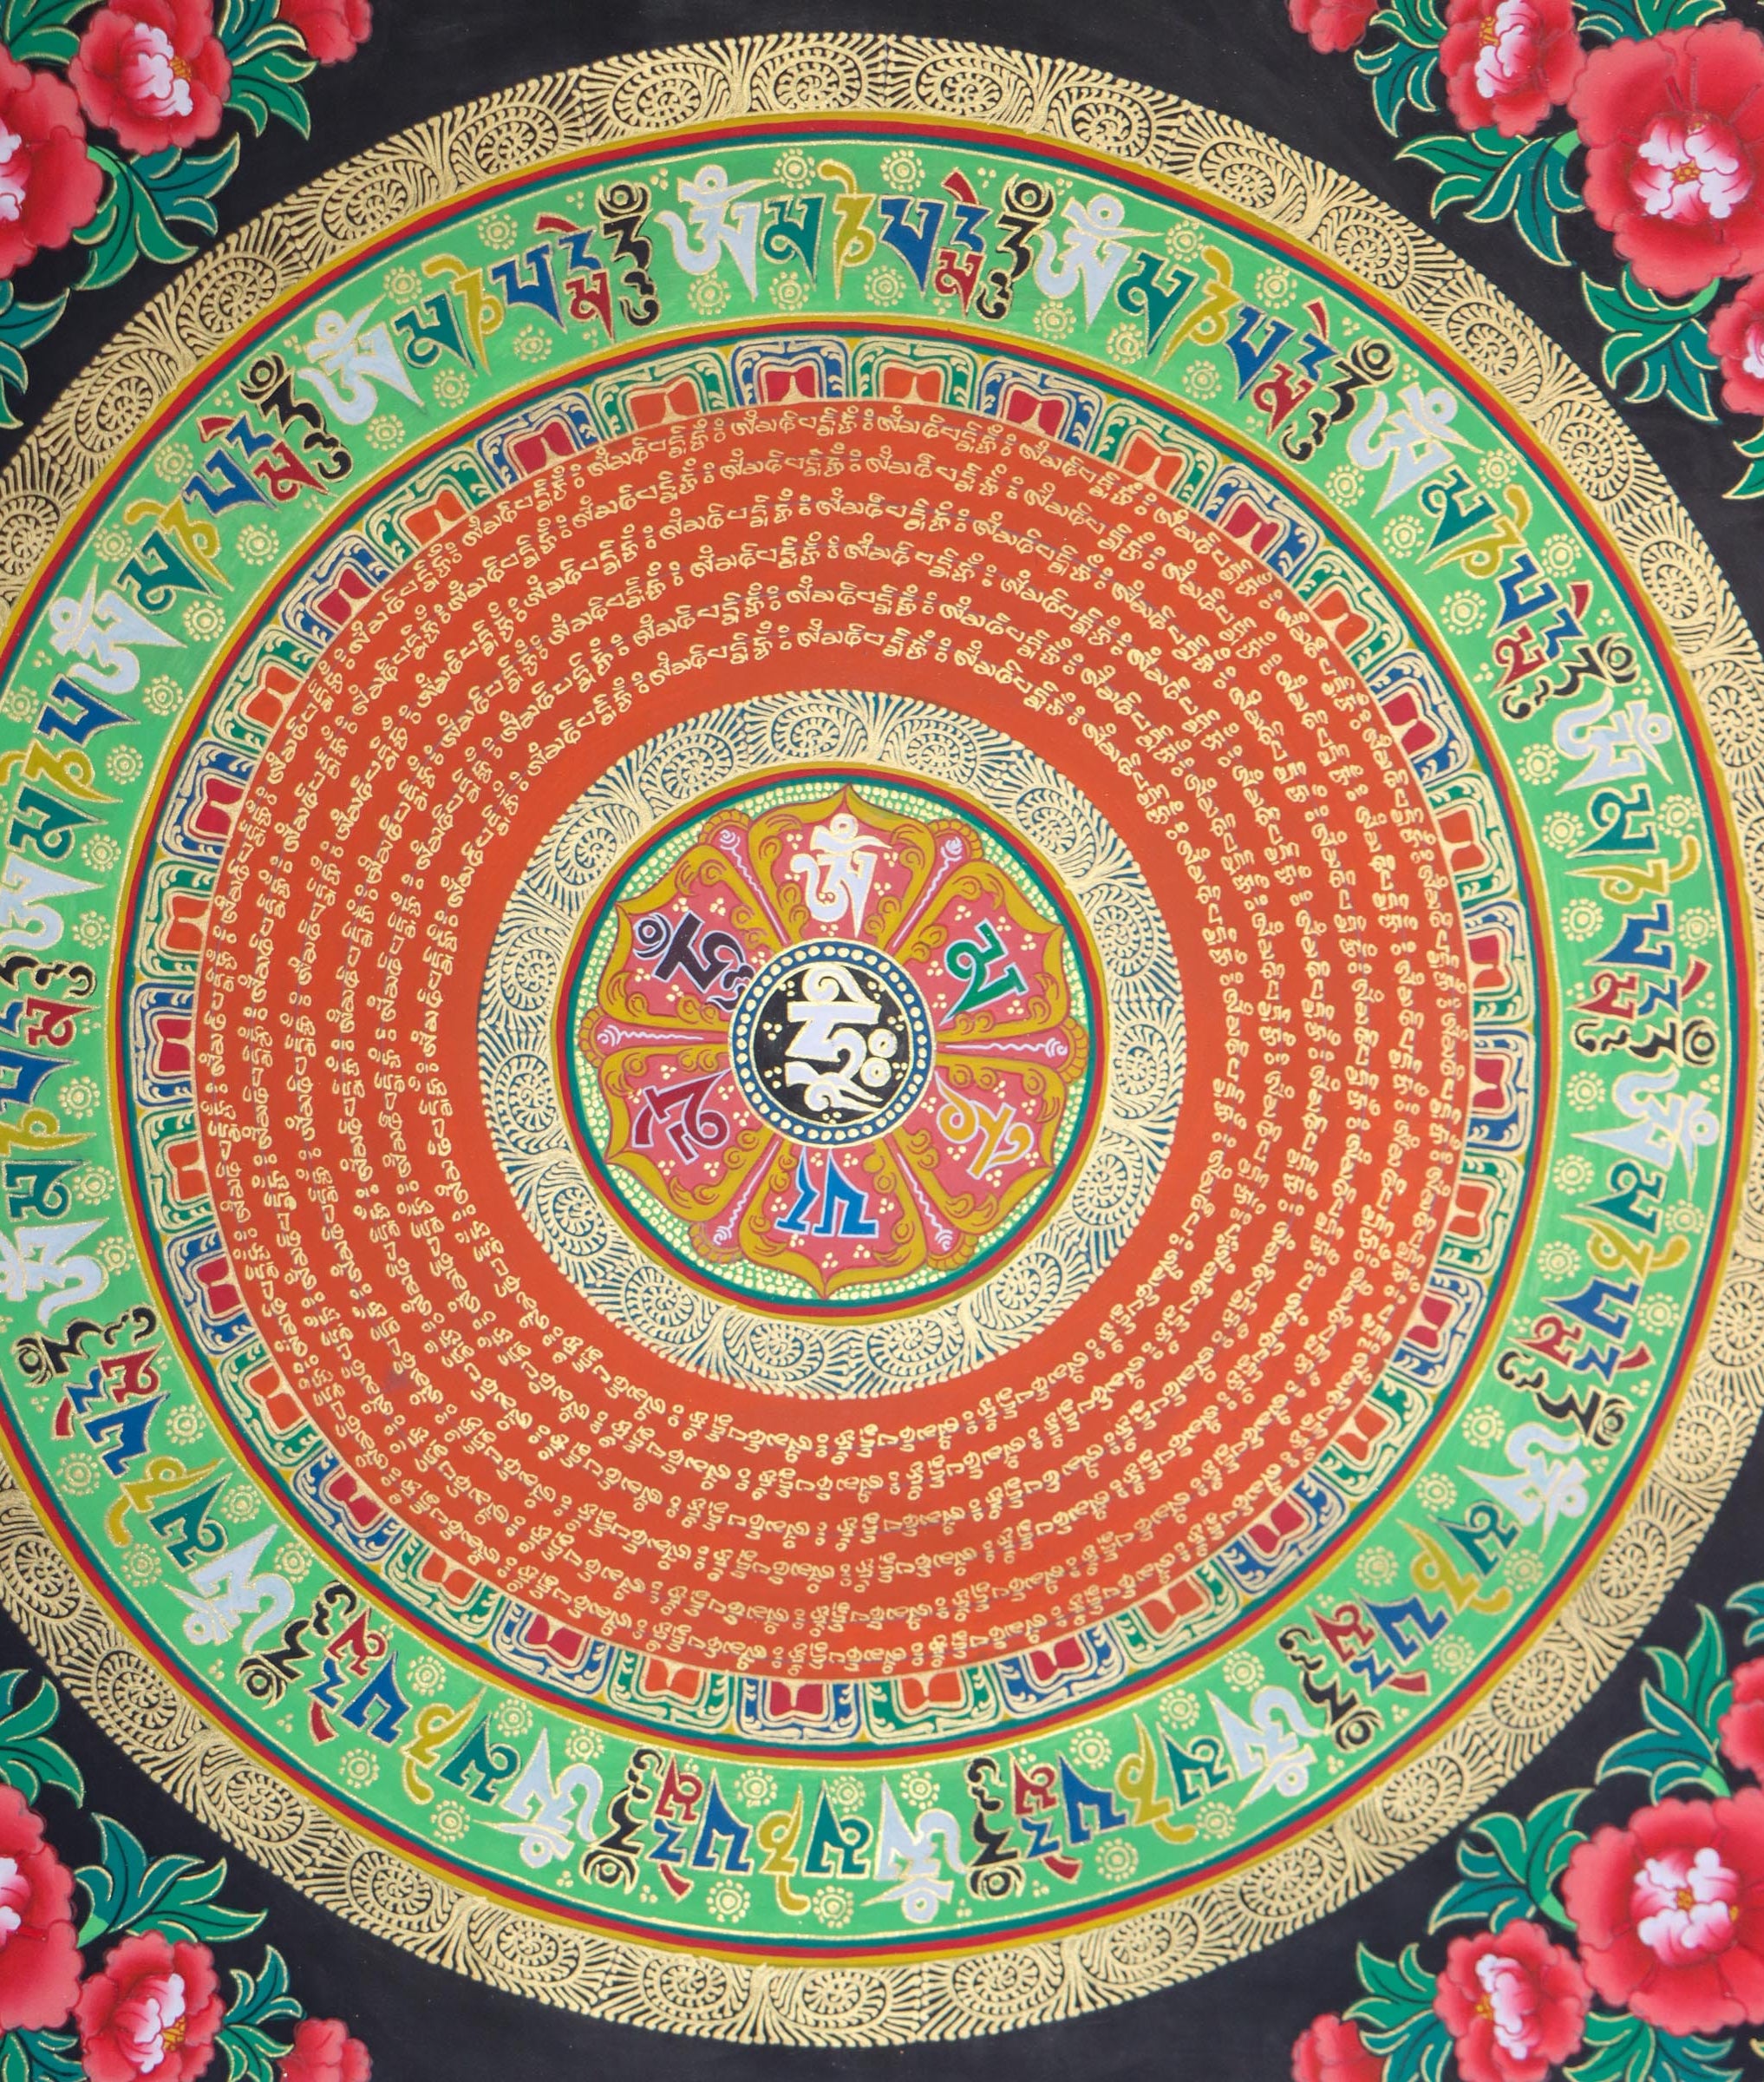 Black Mantra Mandala Thangka for meditation and spirituality . Mantra Mandala Thangka for meditation and spirituality .